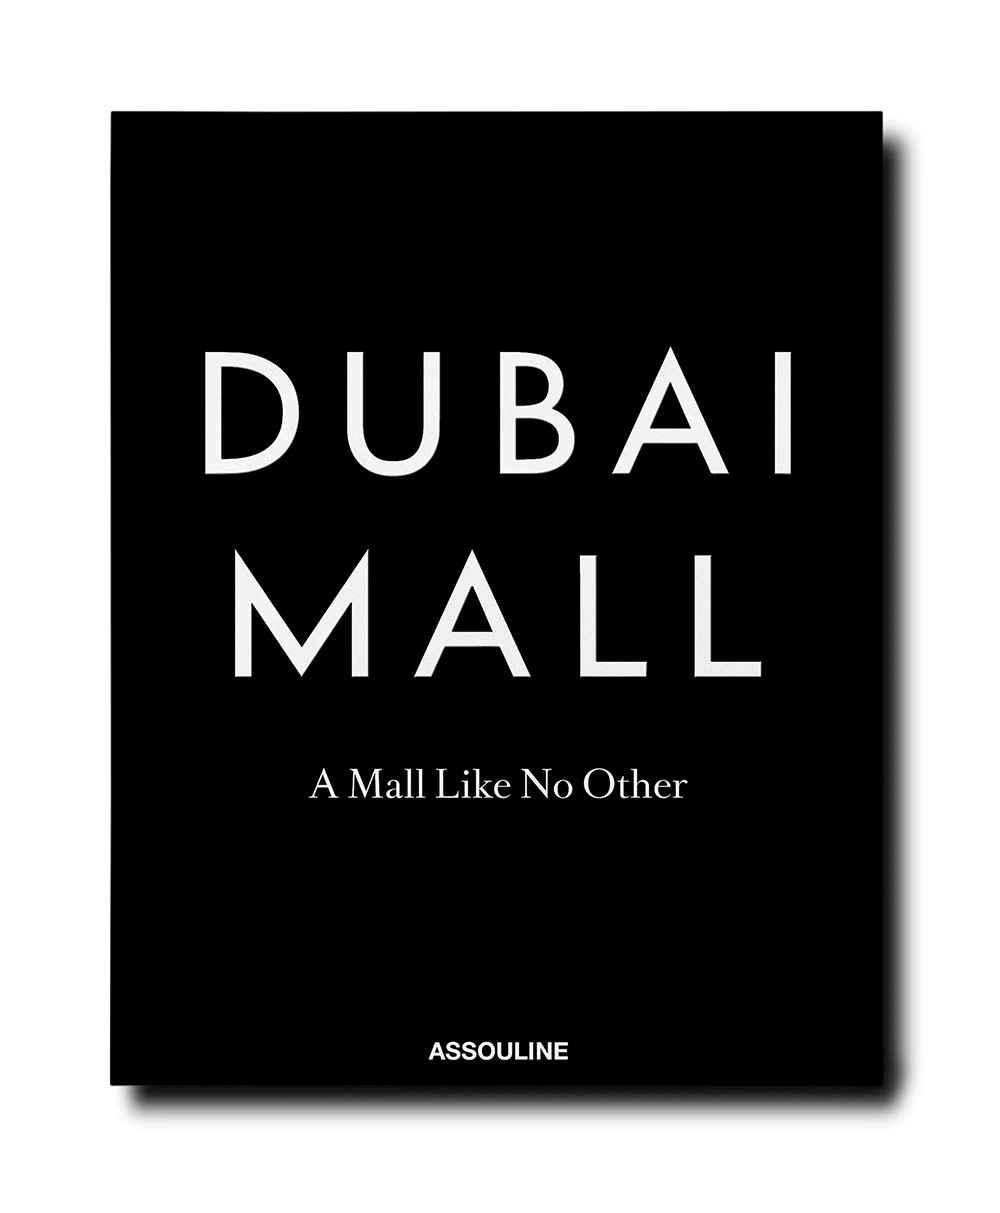 Cover des Coffee Table Books „Dubai Mall“ von Assouline im RAUM concept store 